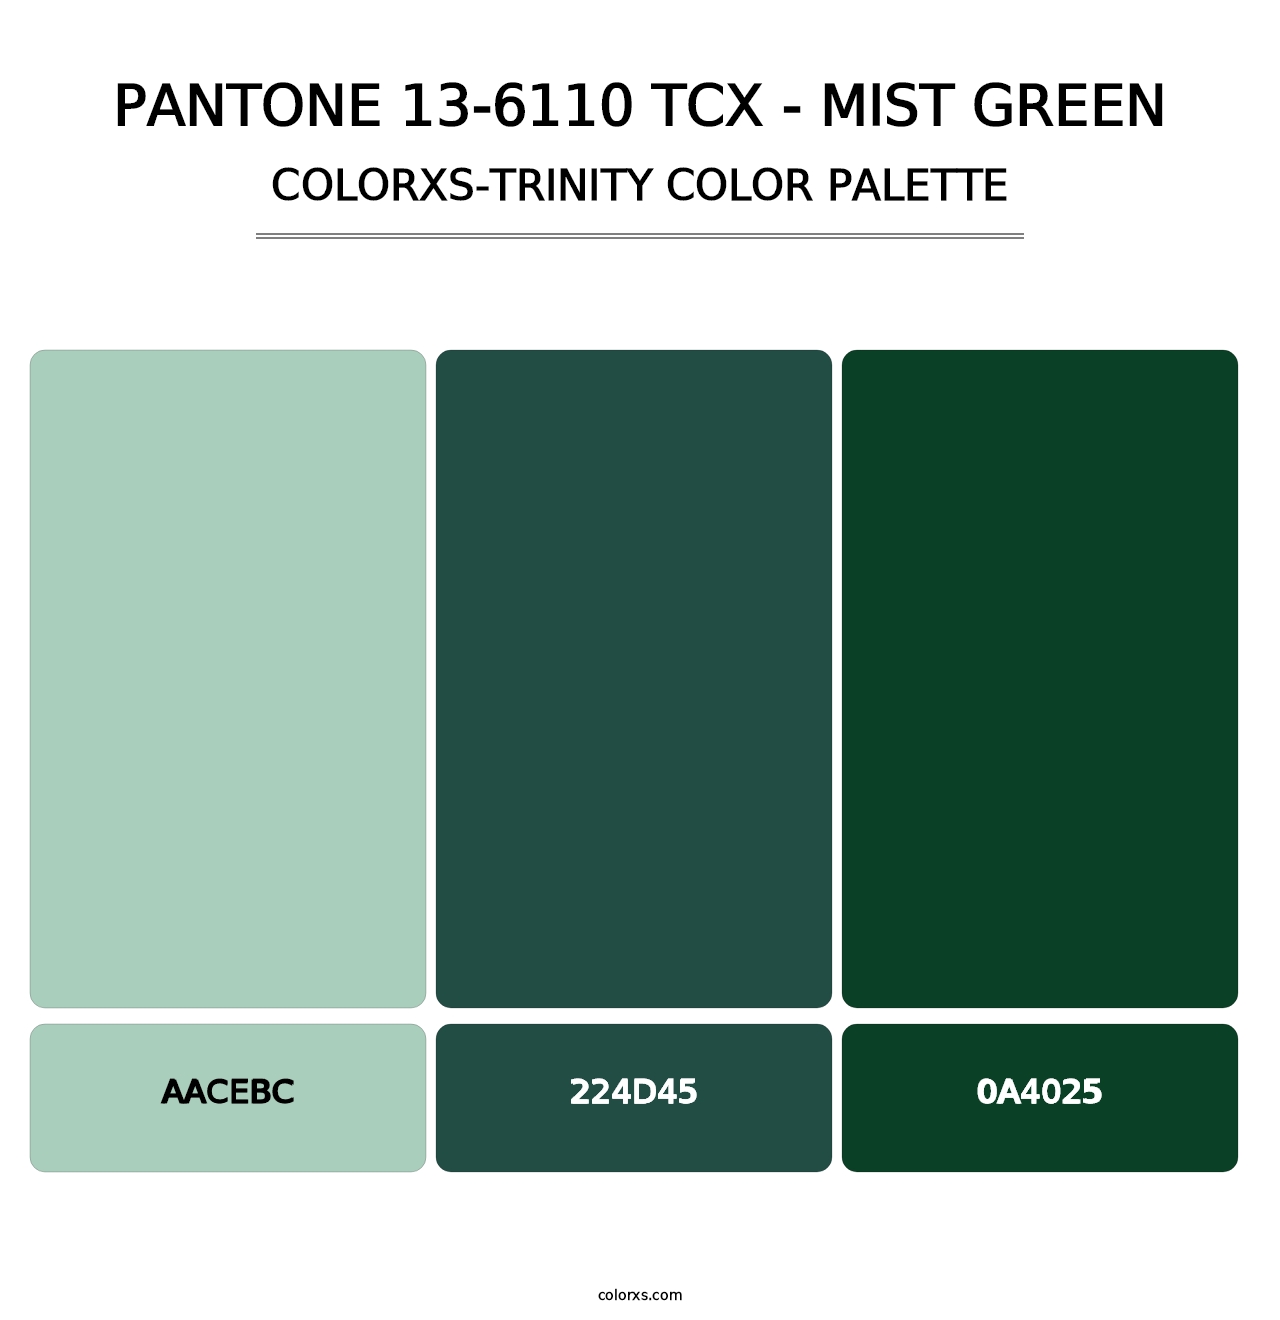 PANTONE 13-6110 TCX - Mist Green - Colorxs Trinity Palette